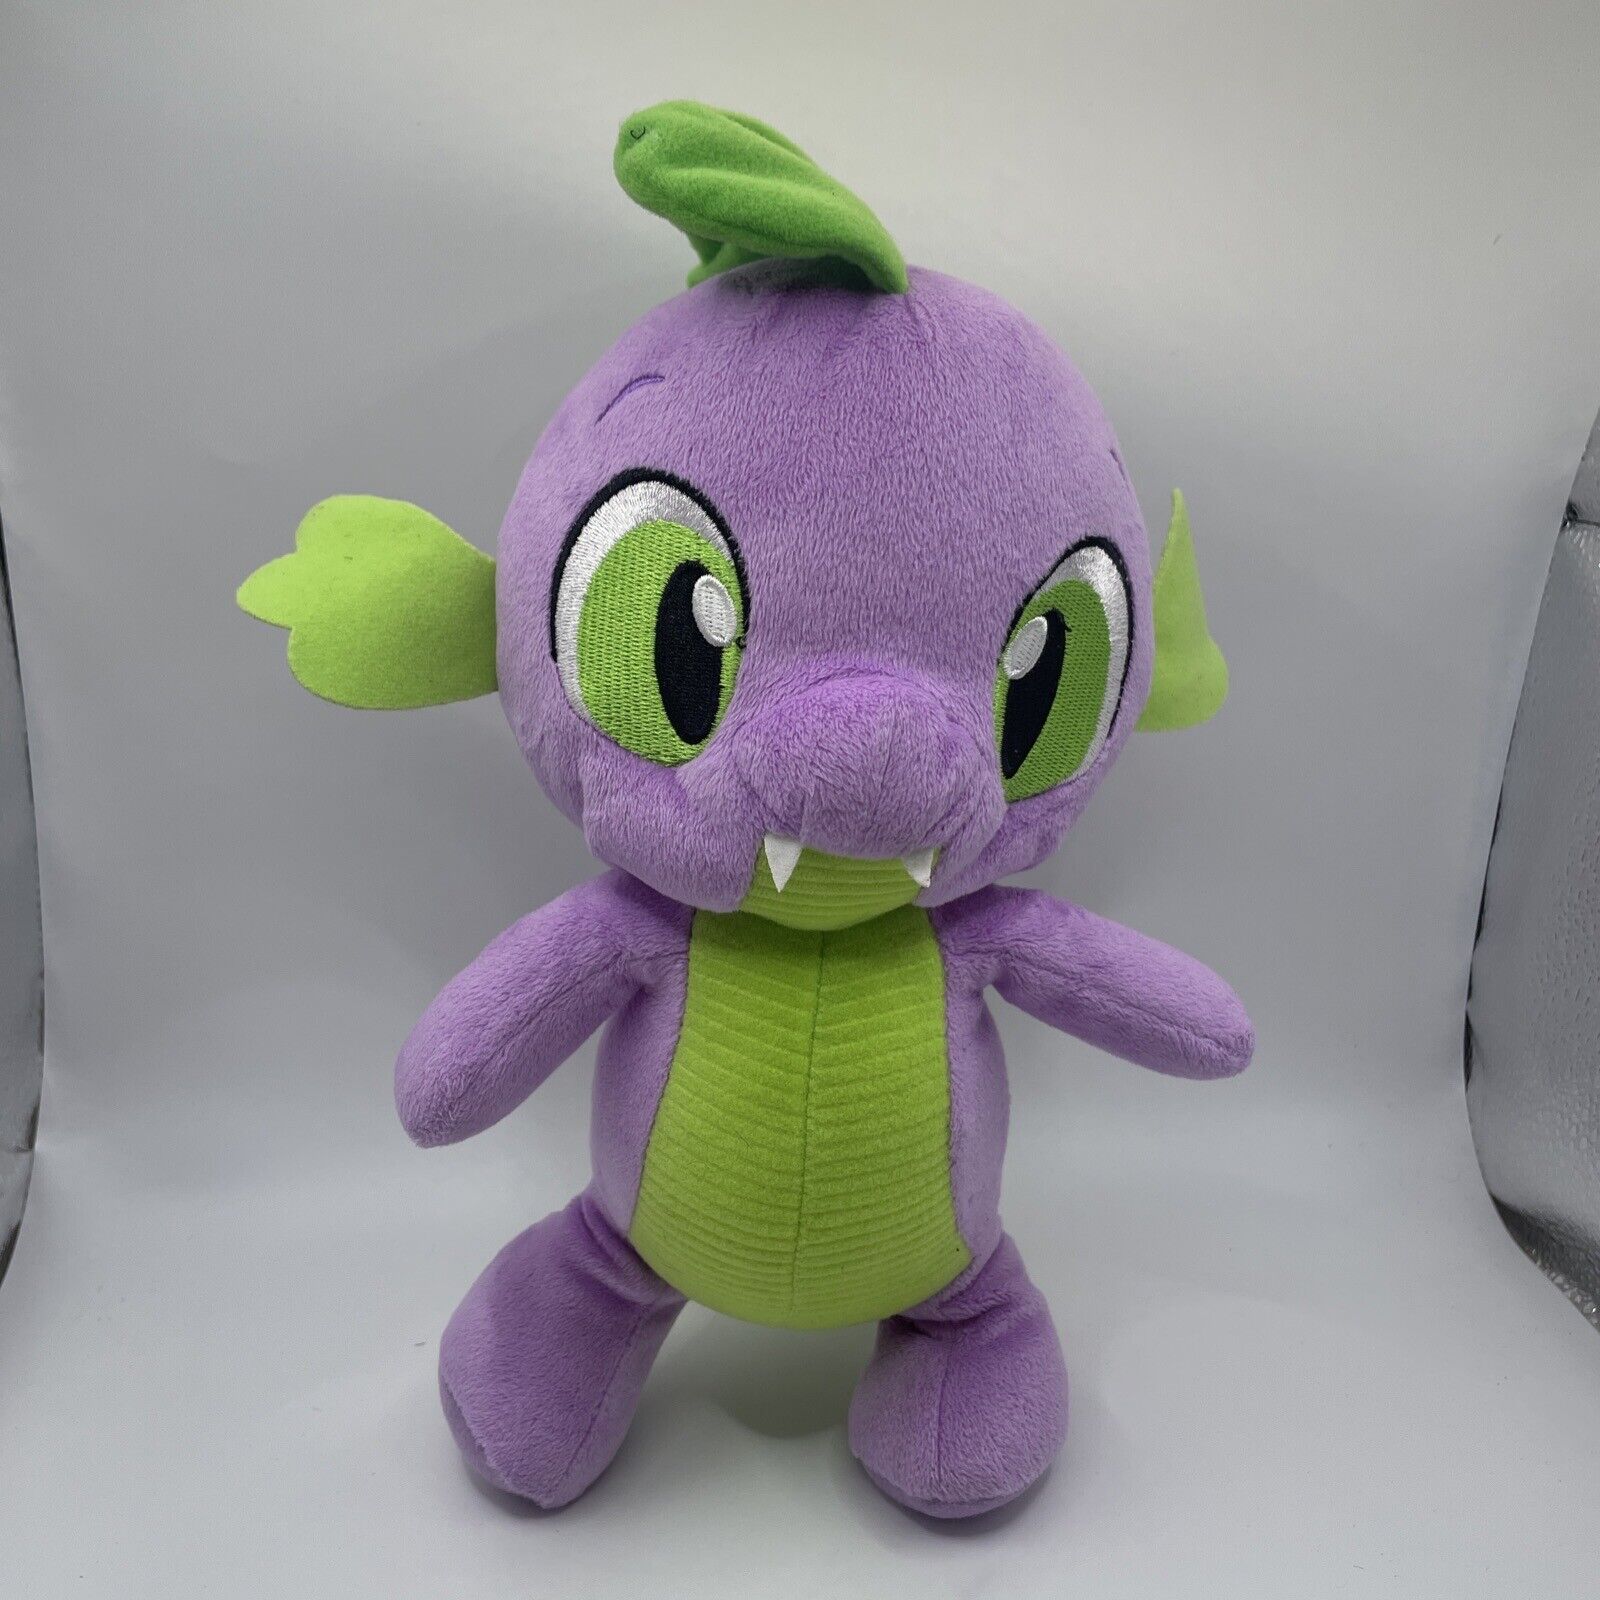 Spike The Baby Dragon My Little Pony Hasbro Plush 2016 30cms Tall Free Post Au